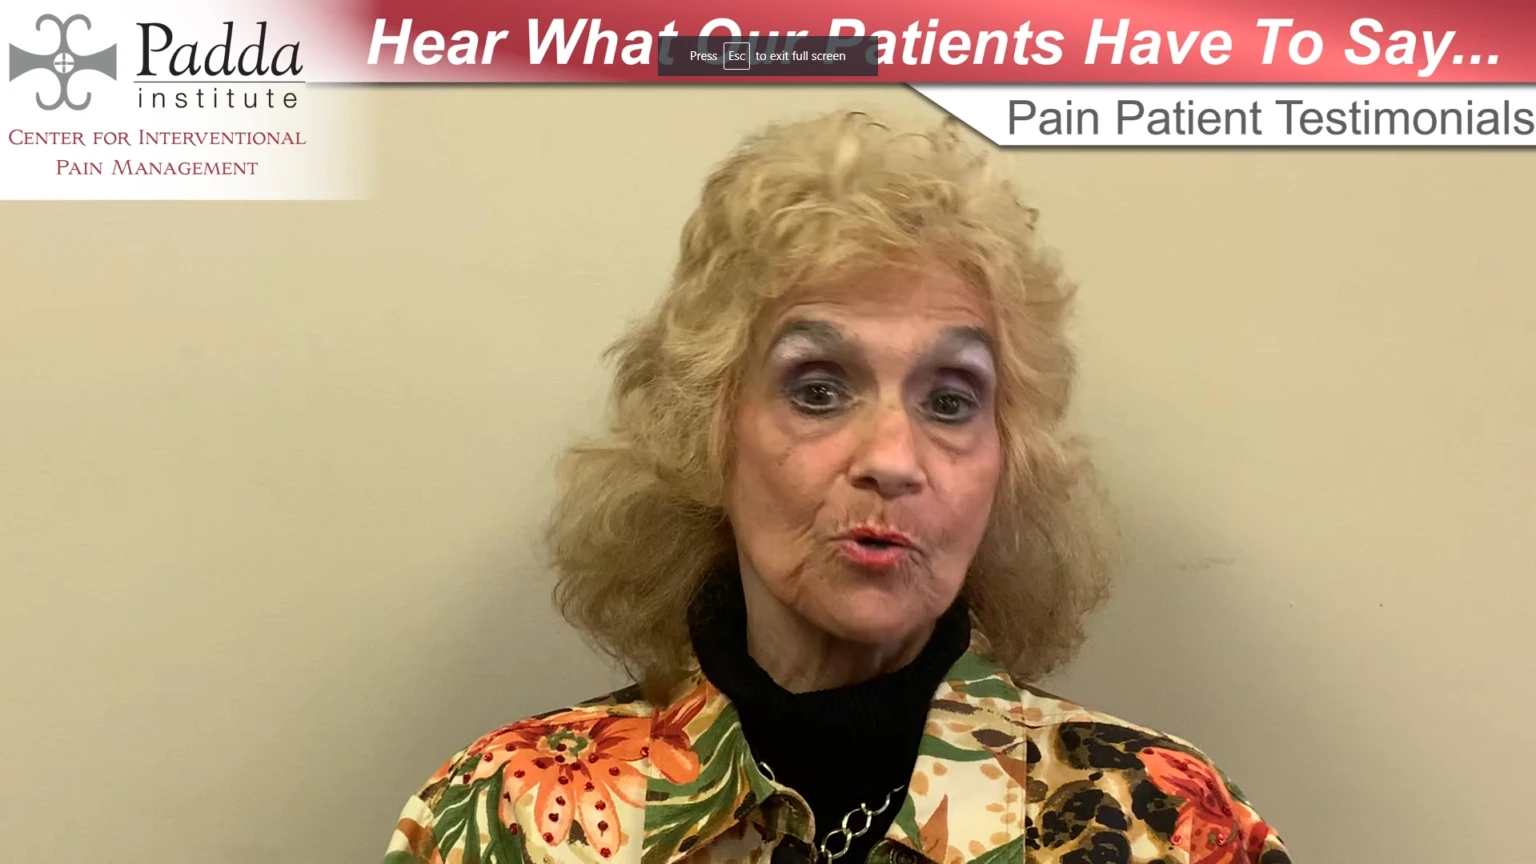 Patient's Story of Overcoming Chronic Pain - Padda Institute